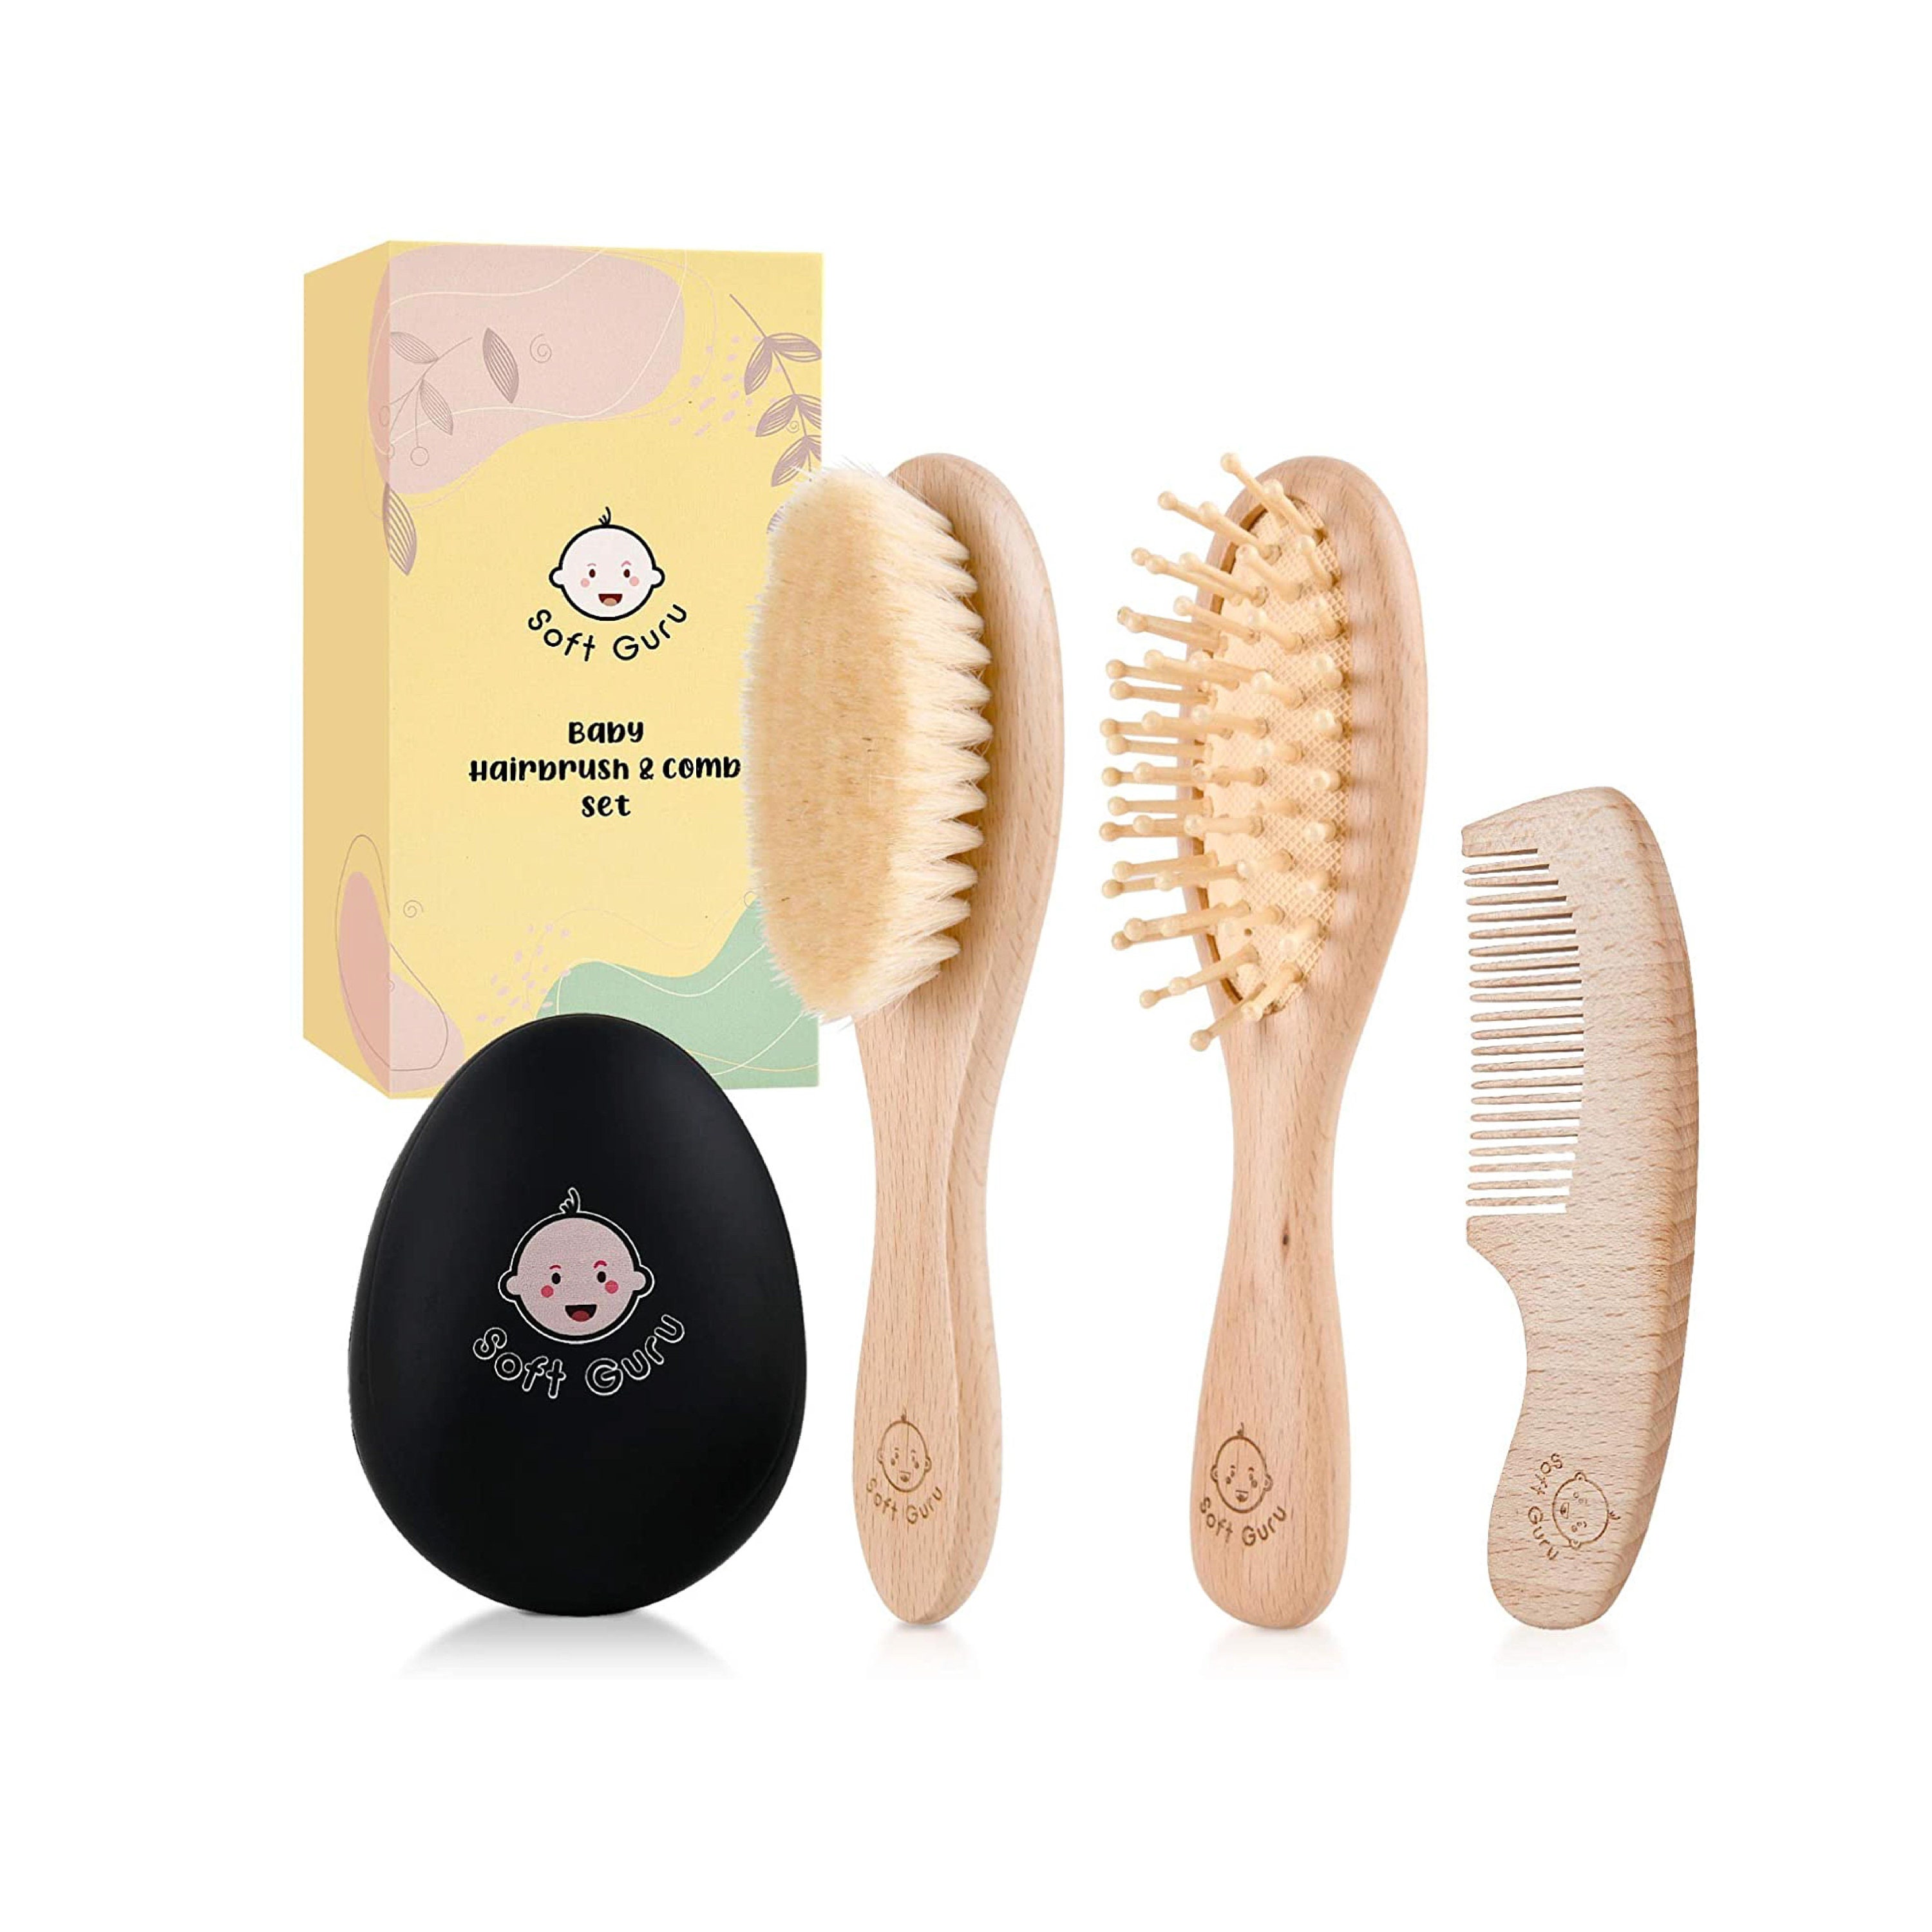 Soft Guru Baby Hair Brush & Comb Set With Wooden Finish. - Etsy